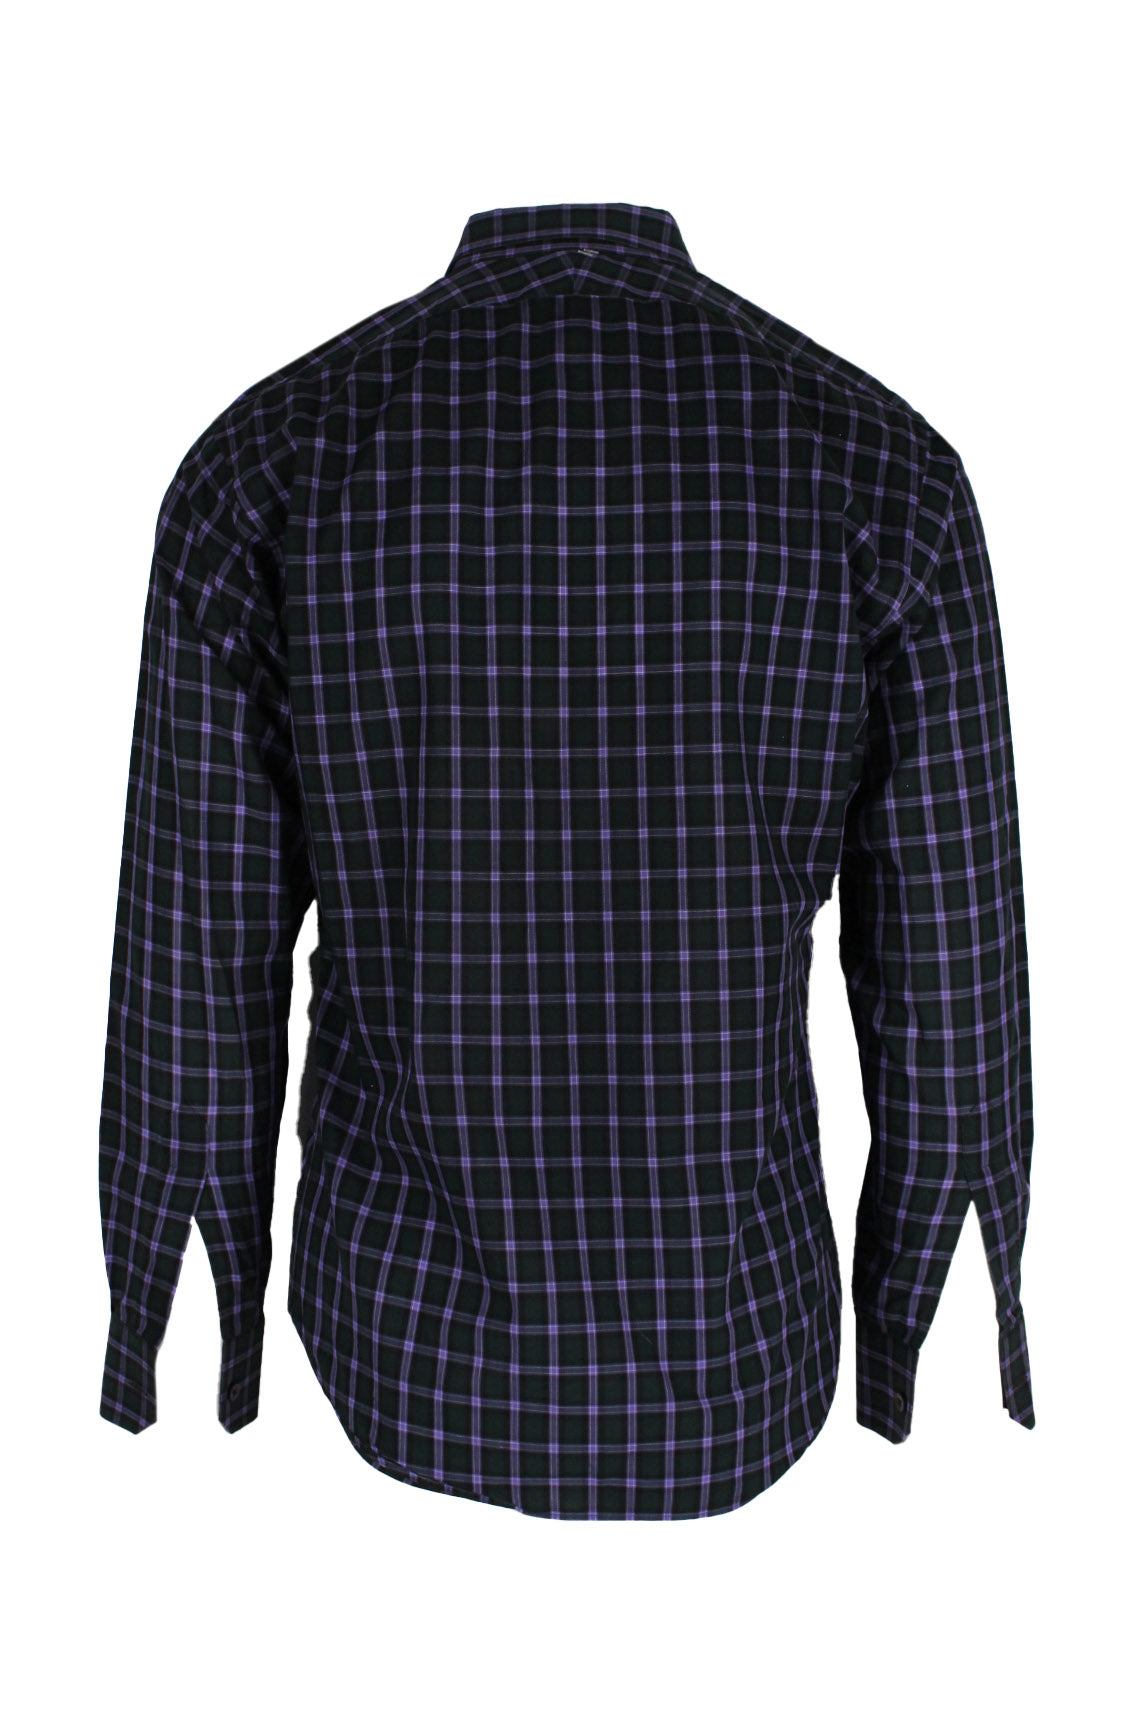 back angle seize sur vingt long sleeve plaid shirt on masculine mannequin torso with single-button cuffs.